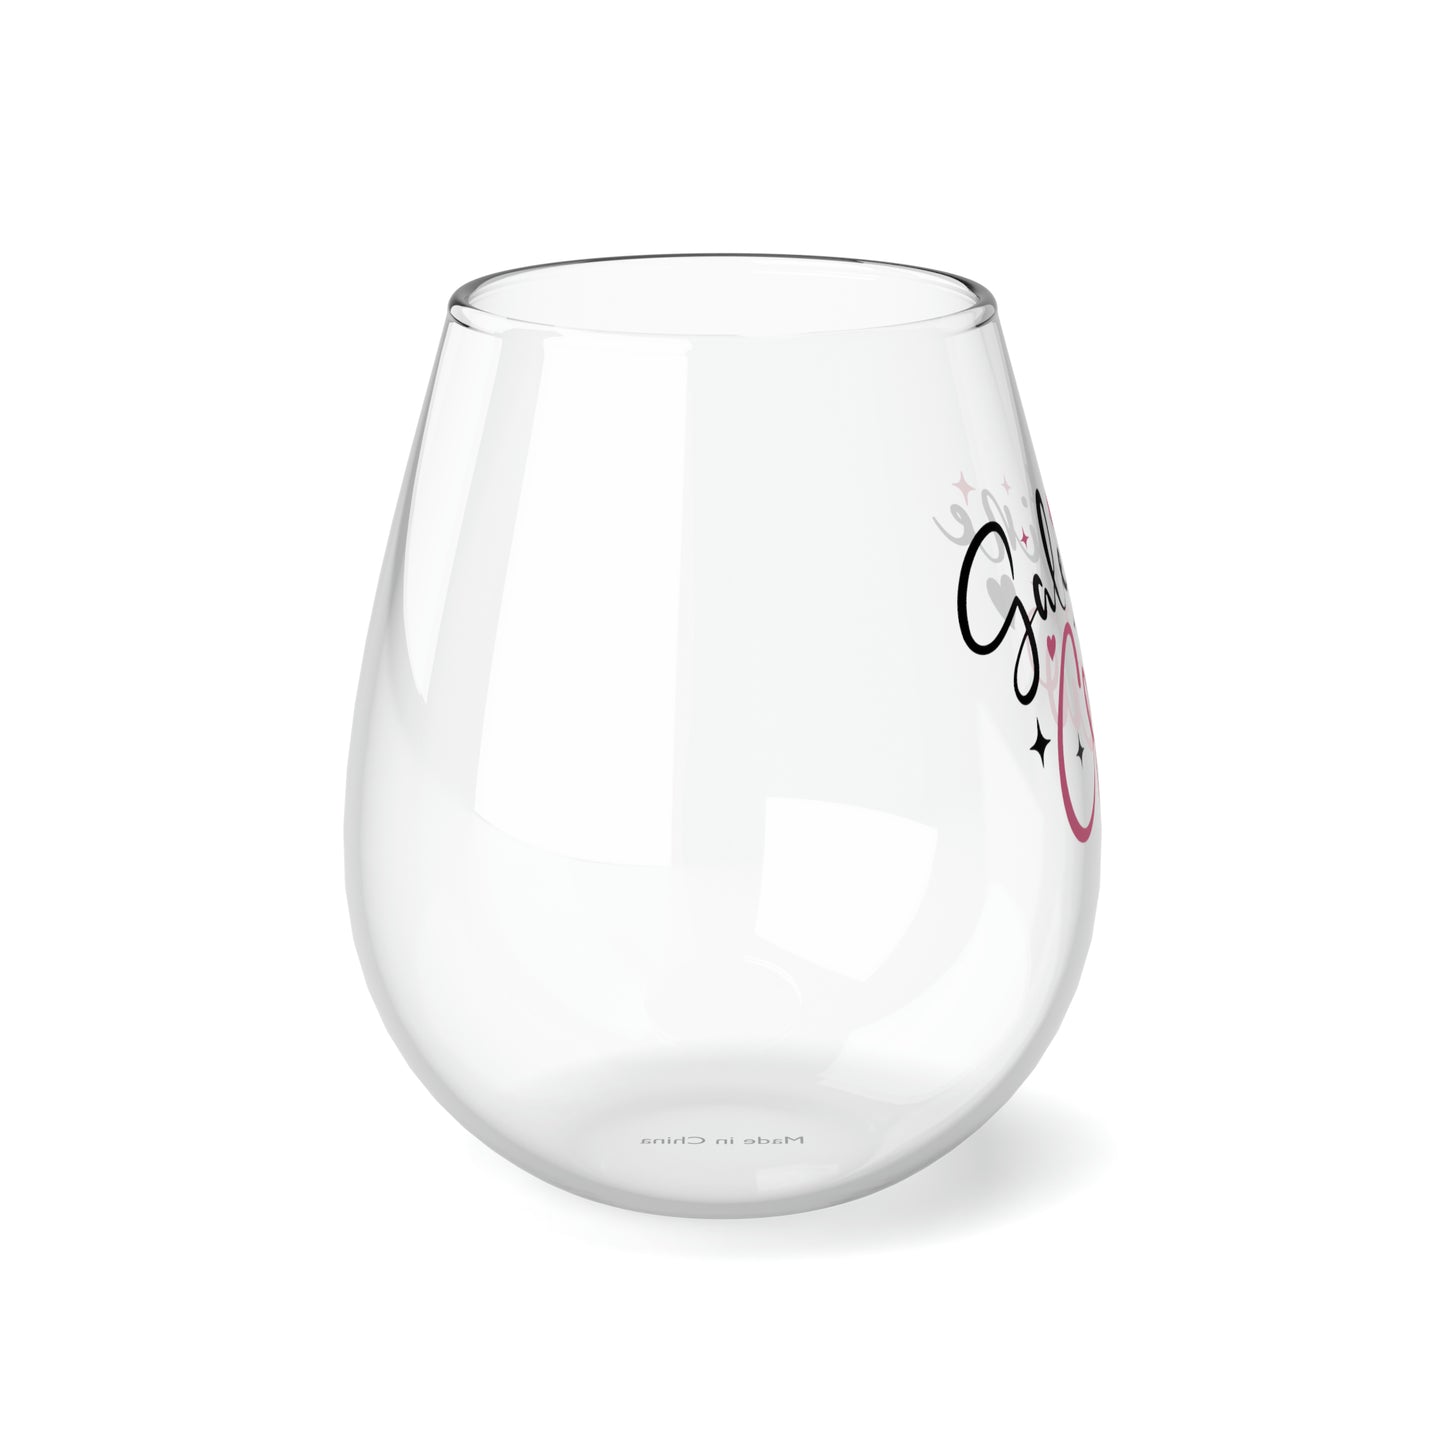 Galentine Crew Stemless Wine Glass, 11.75oz